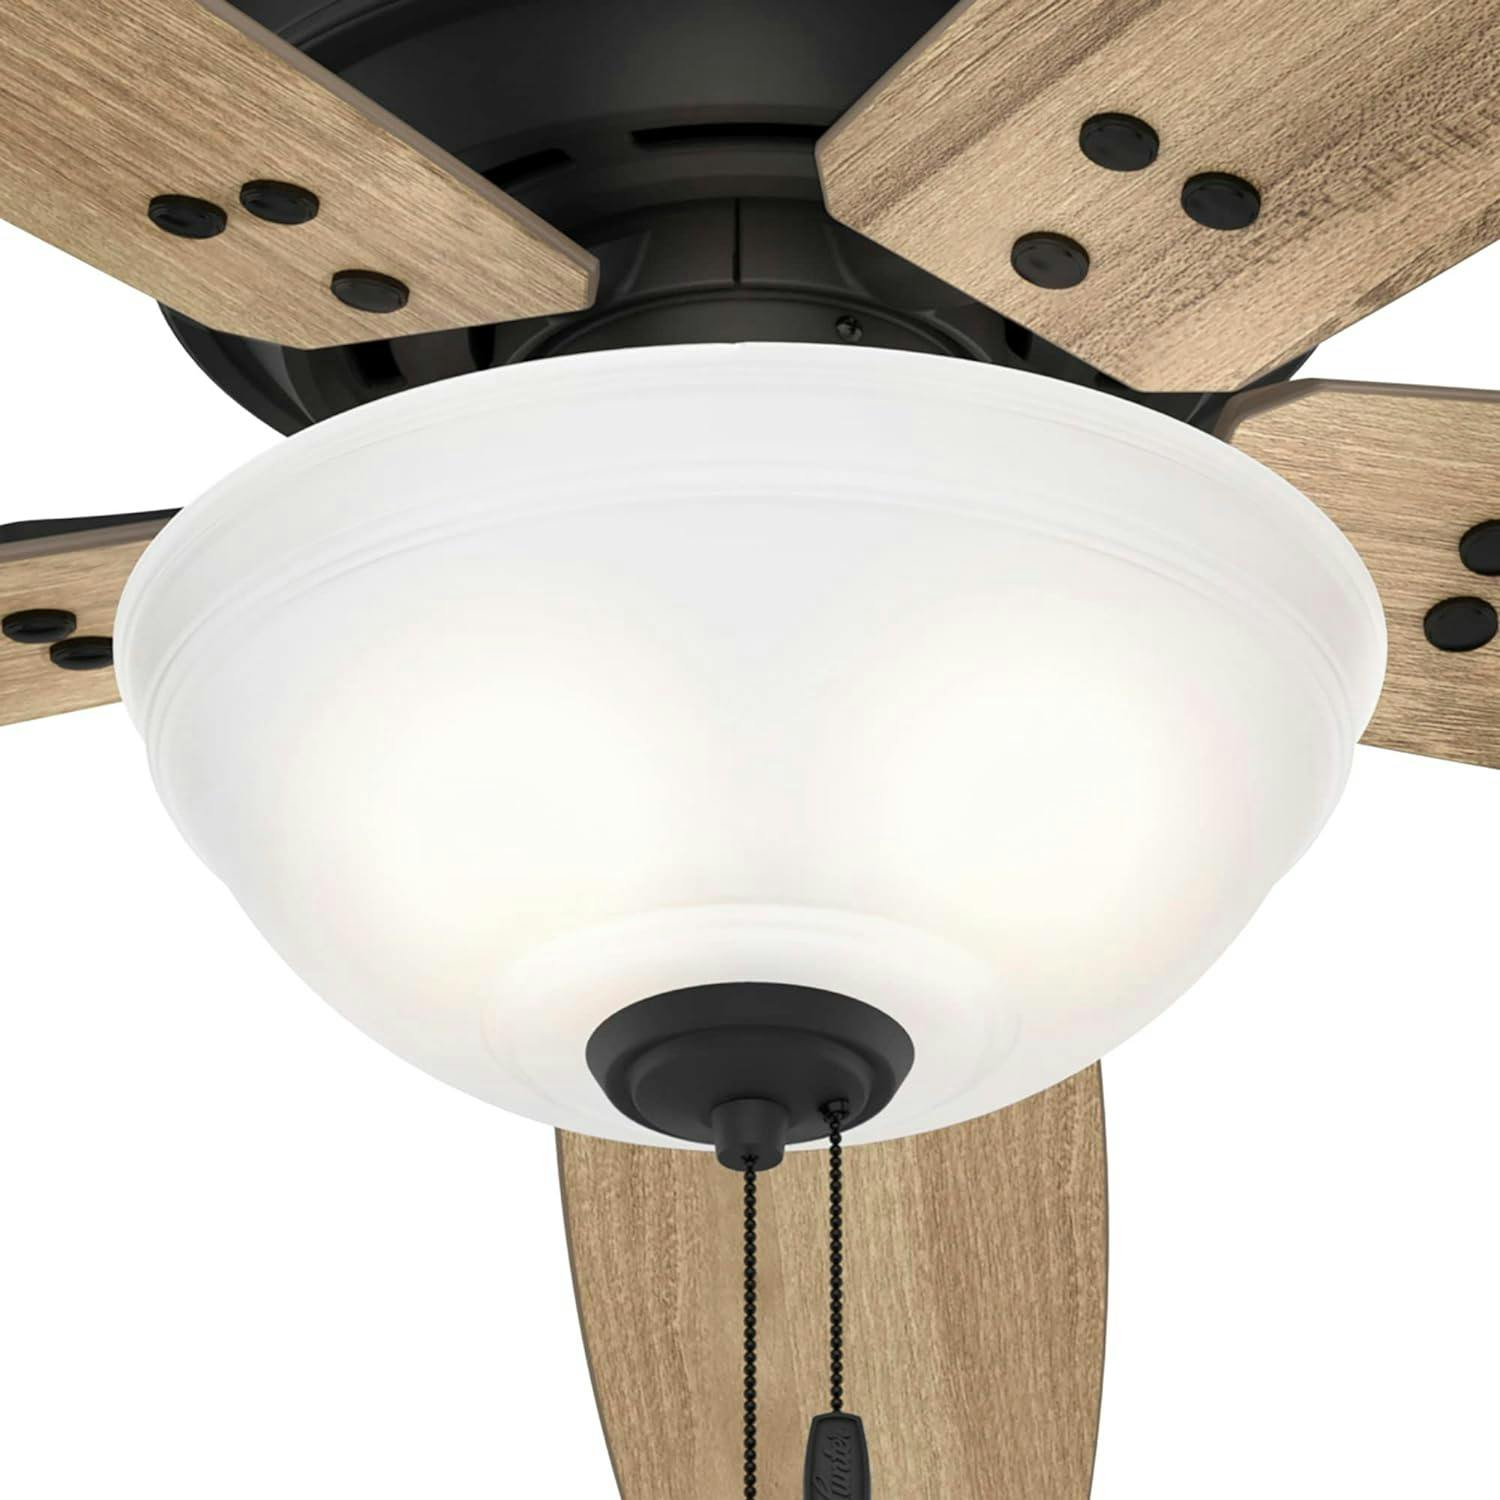 Rustic 60" Matte Black Ceiling Fan with LED Light & WhisperWind Motor